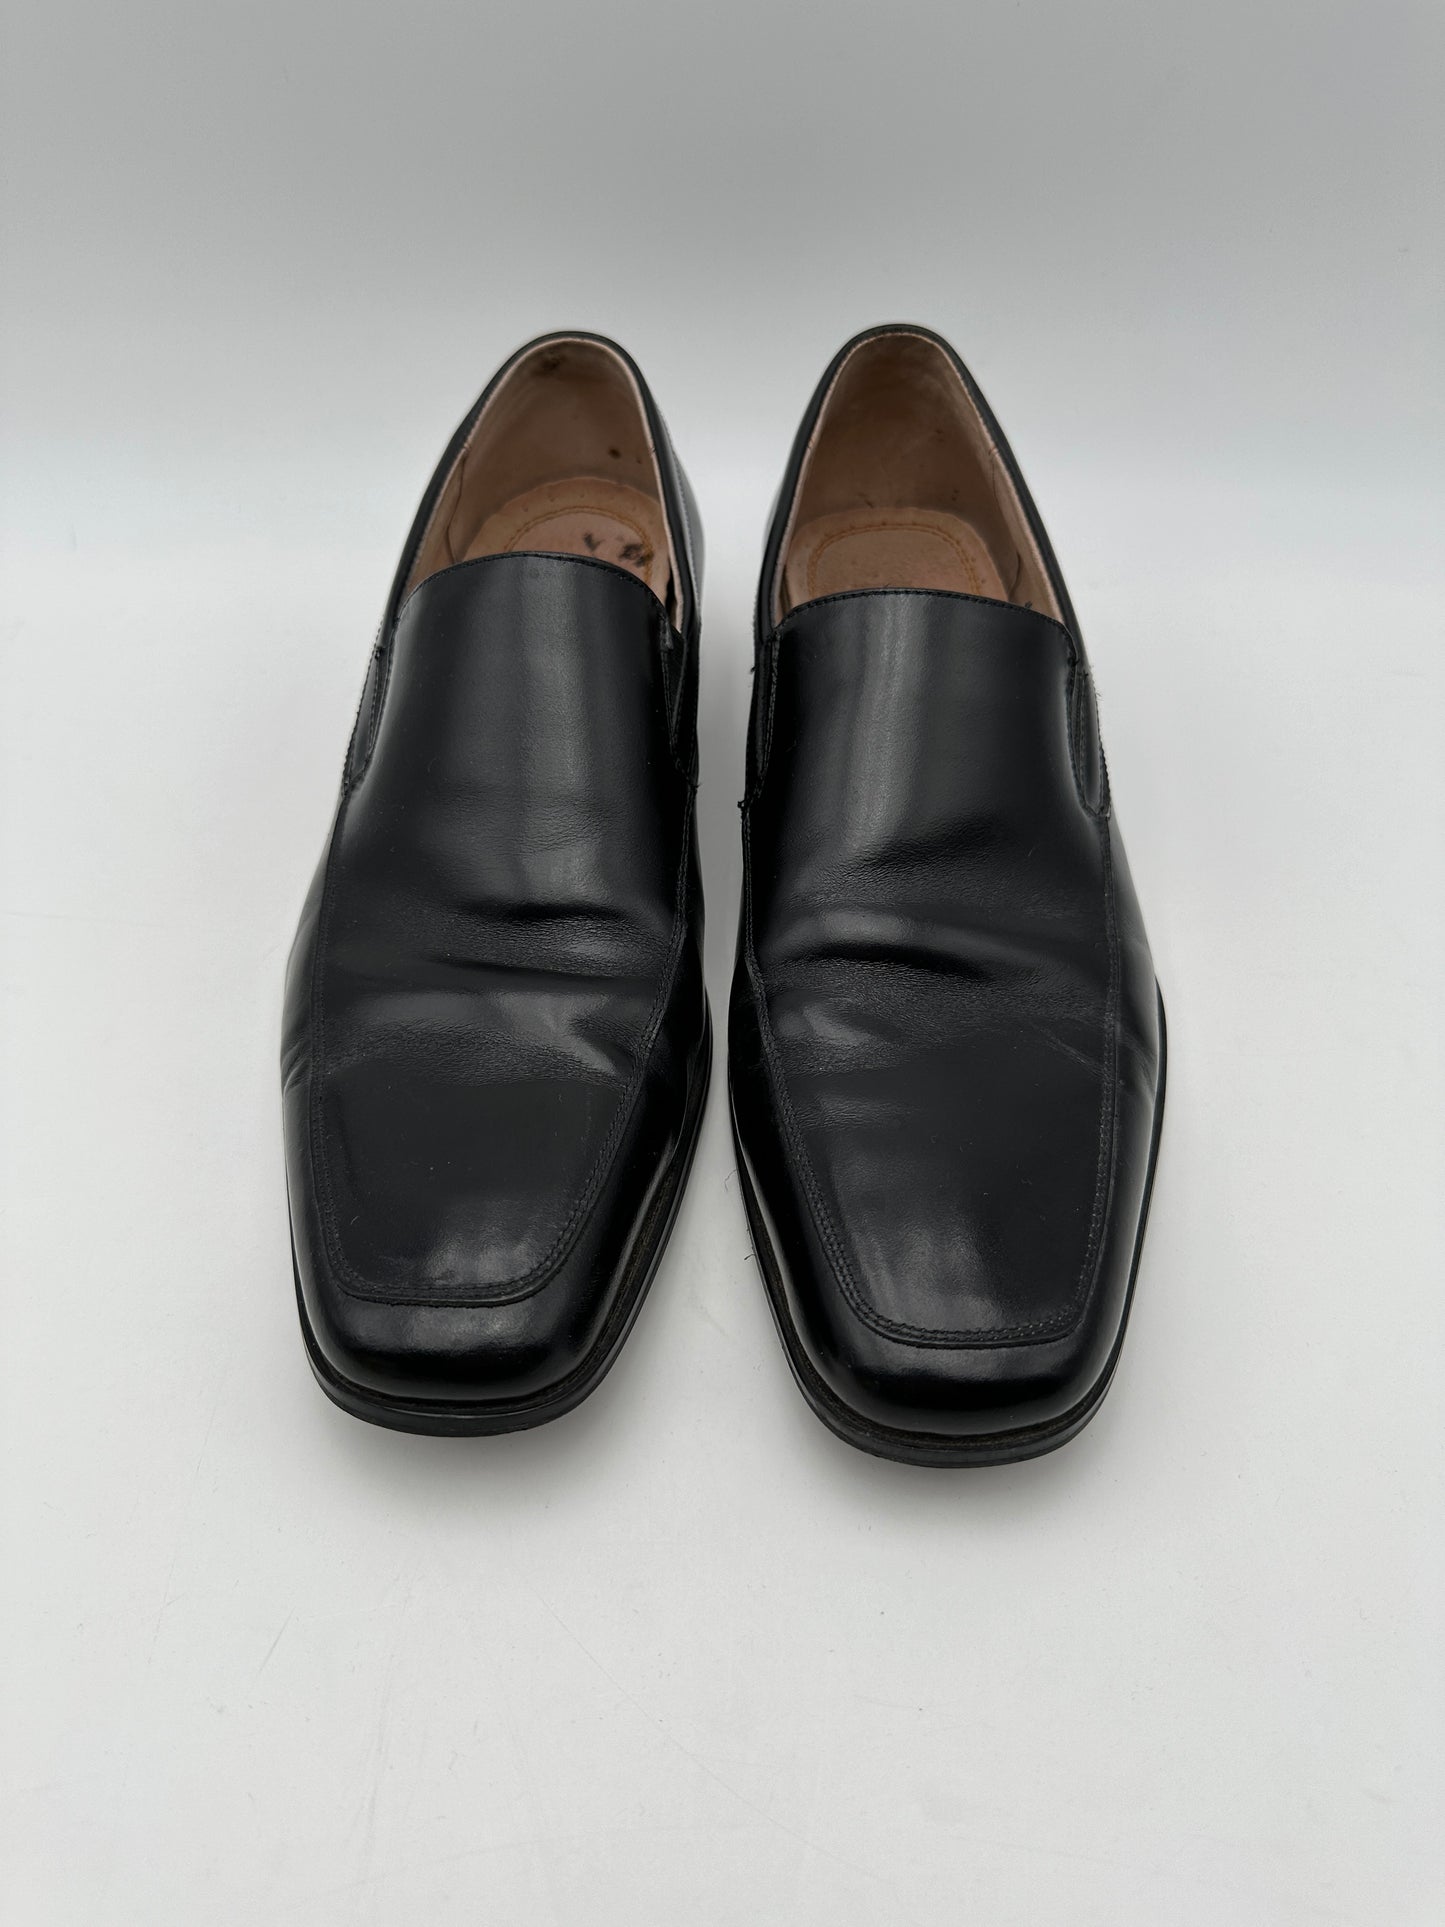 Stacy Adams Men's Size 10 Black Leather Slip-On Dress Shoes